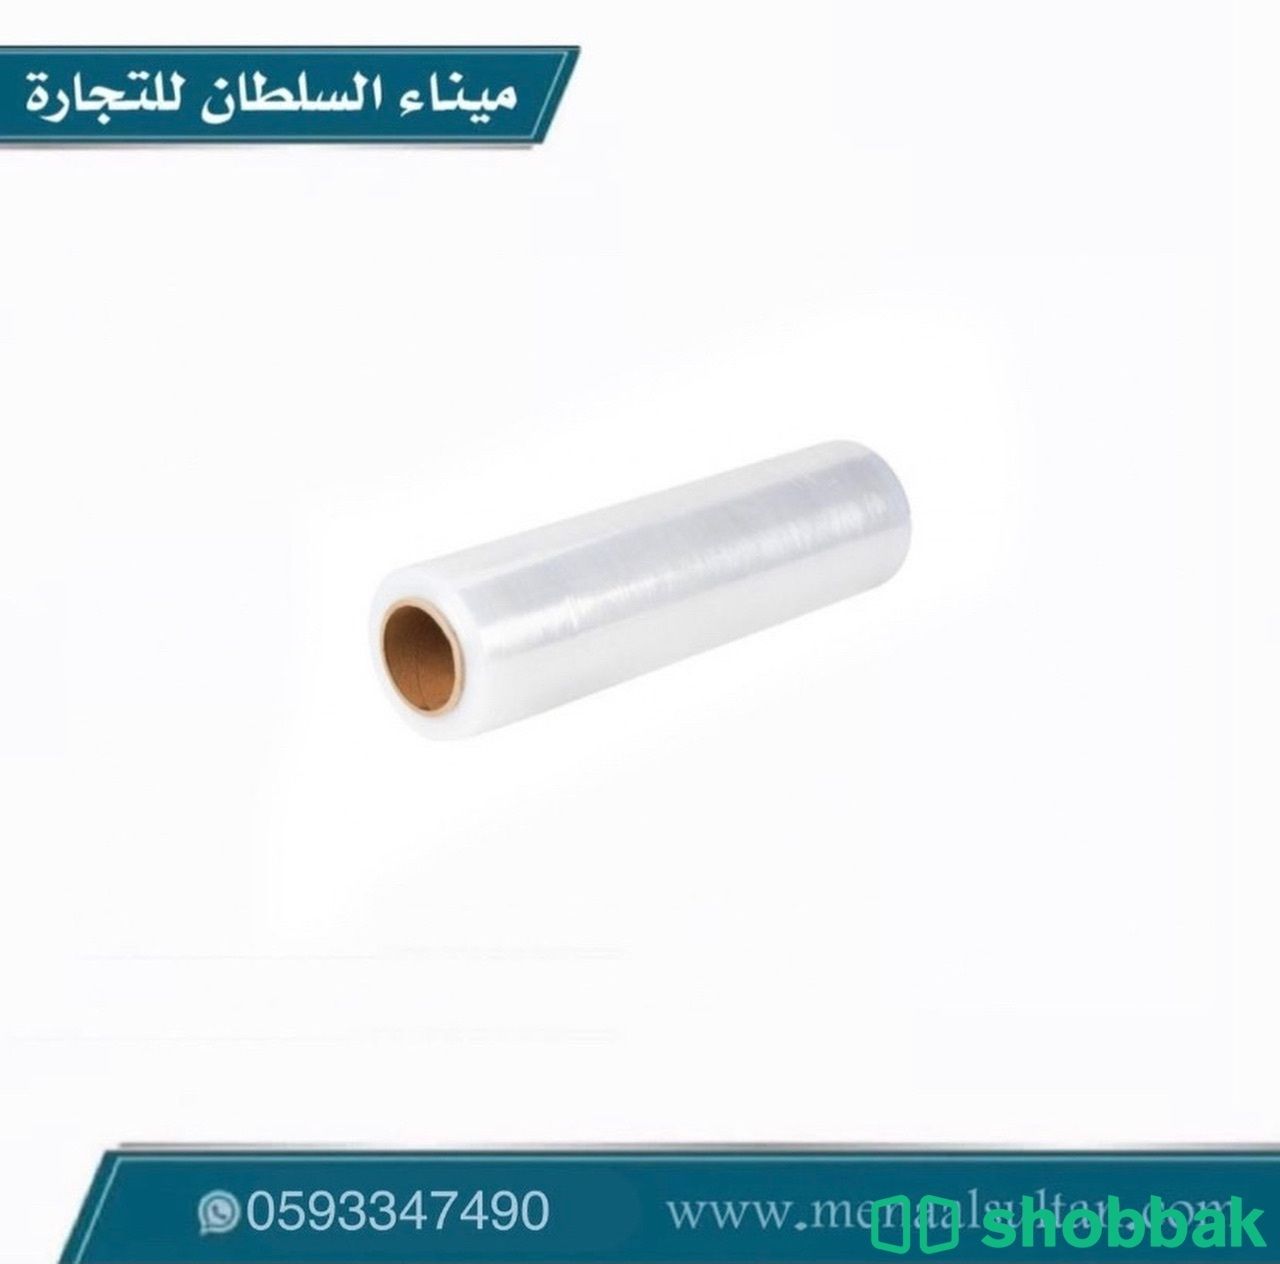 رول تغليف بلاستيك شفاف 300 متر  2.5 كيلو Shobbak Saudi Arabia